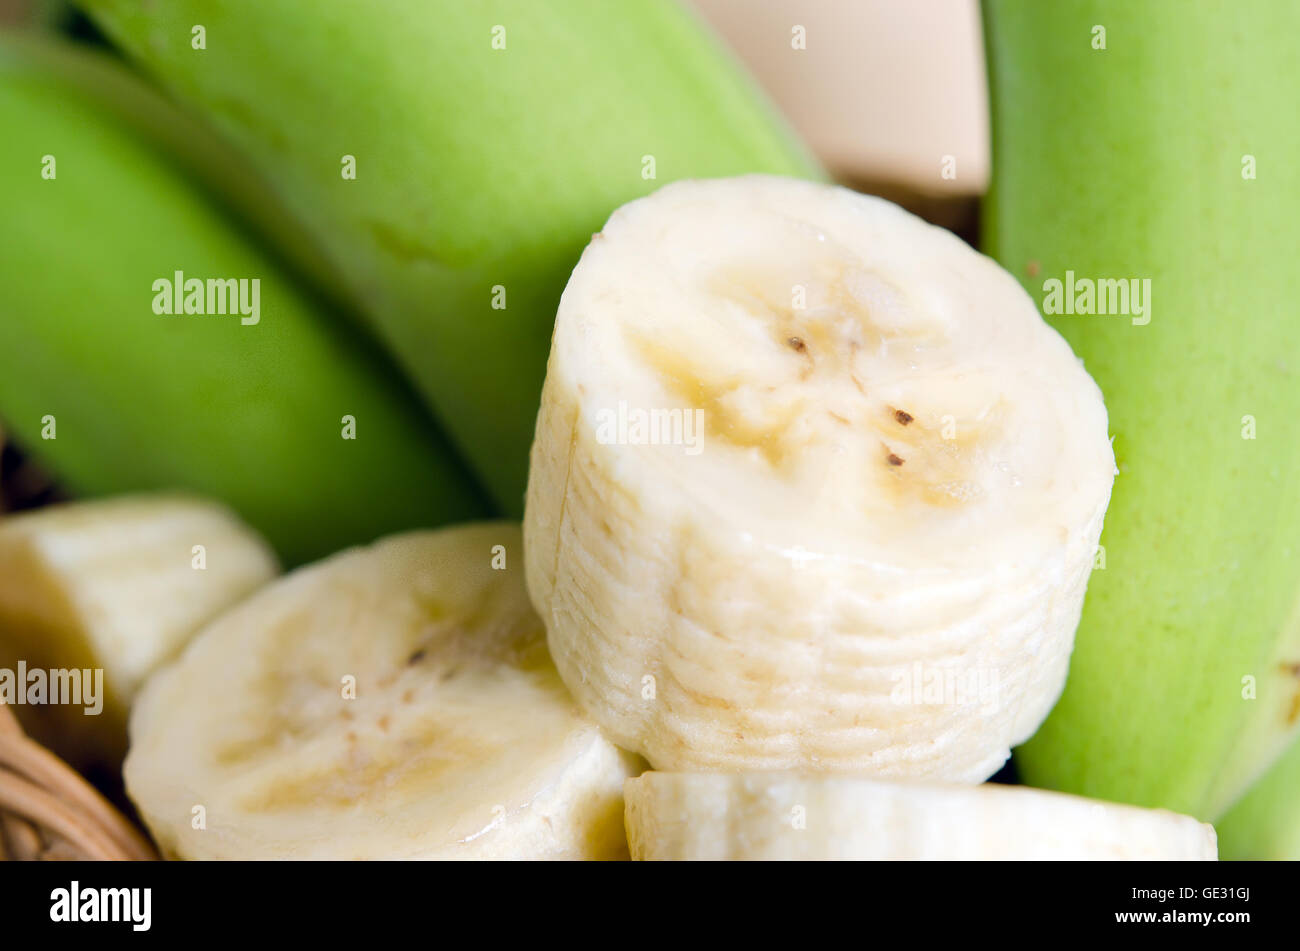 Banana (Other names are Musa acuminata, Musa balbisiana, and Musa x paradisiaca) fruit macro view Stock Photo